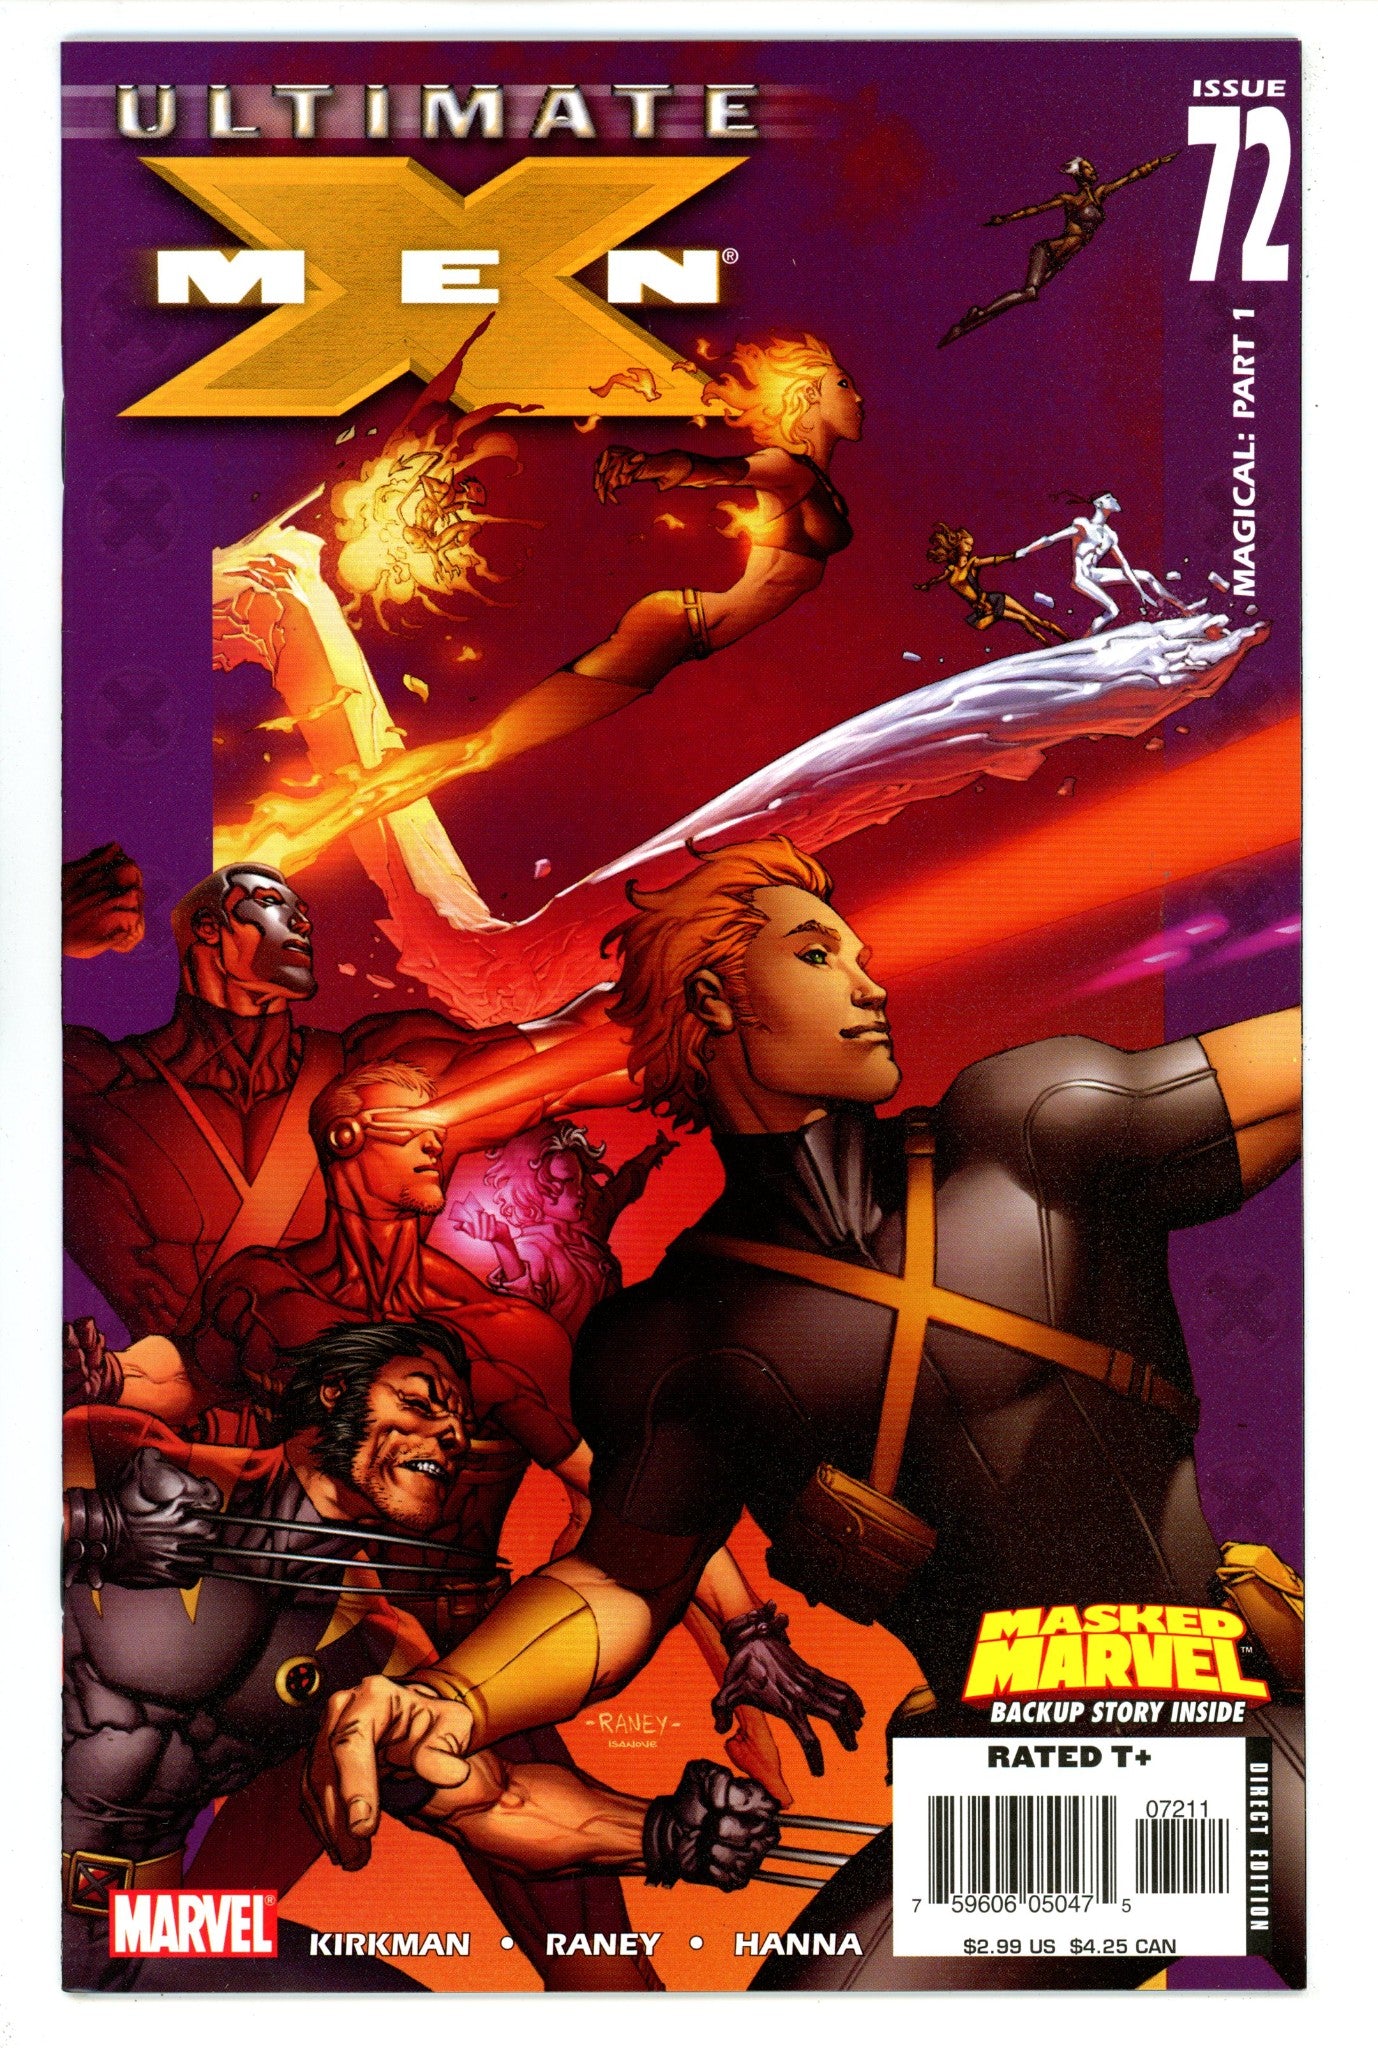 Ultimate X-Men Vol 1 72 High Grade (2006) 